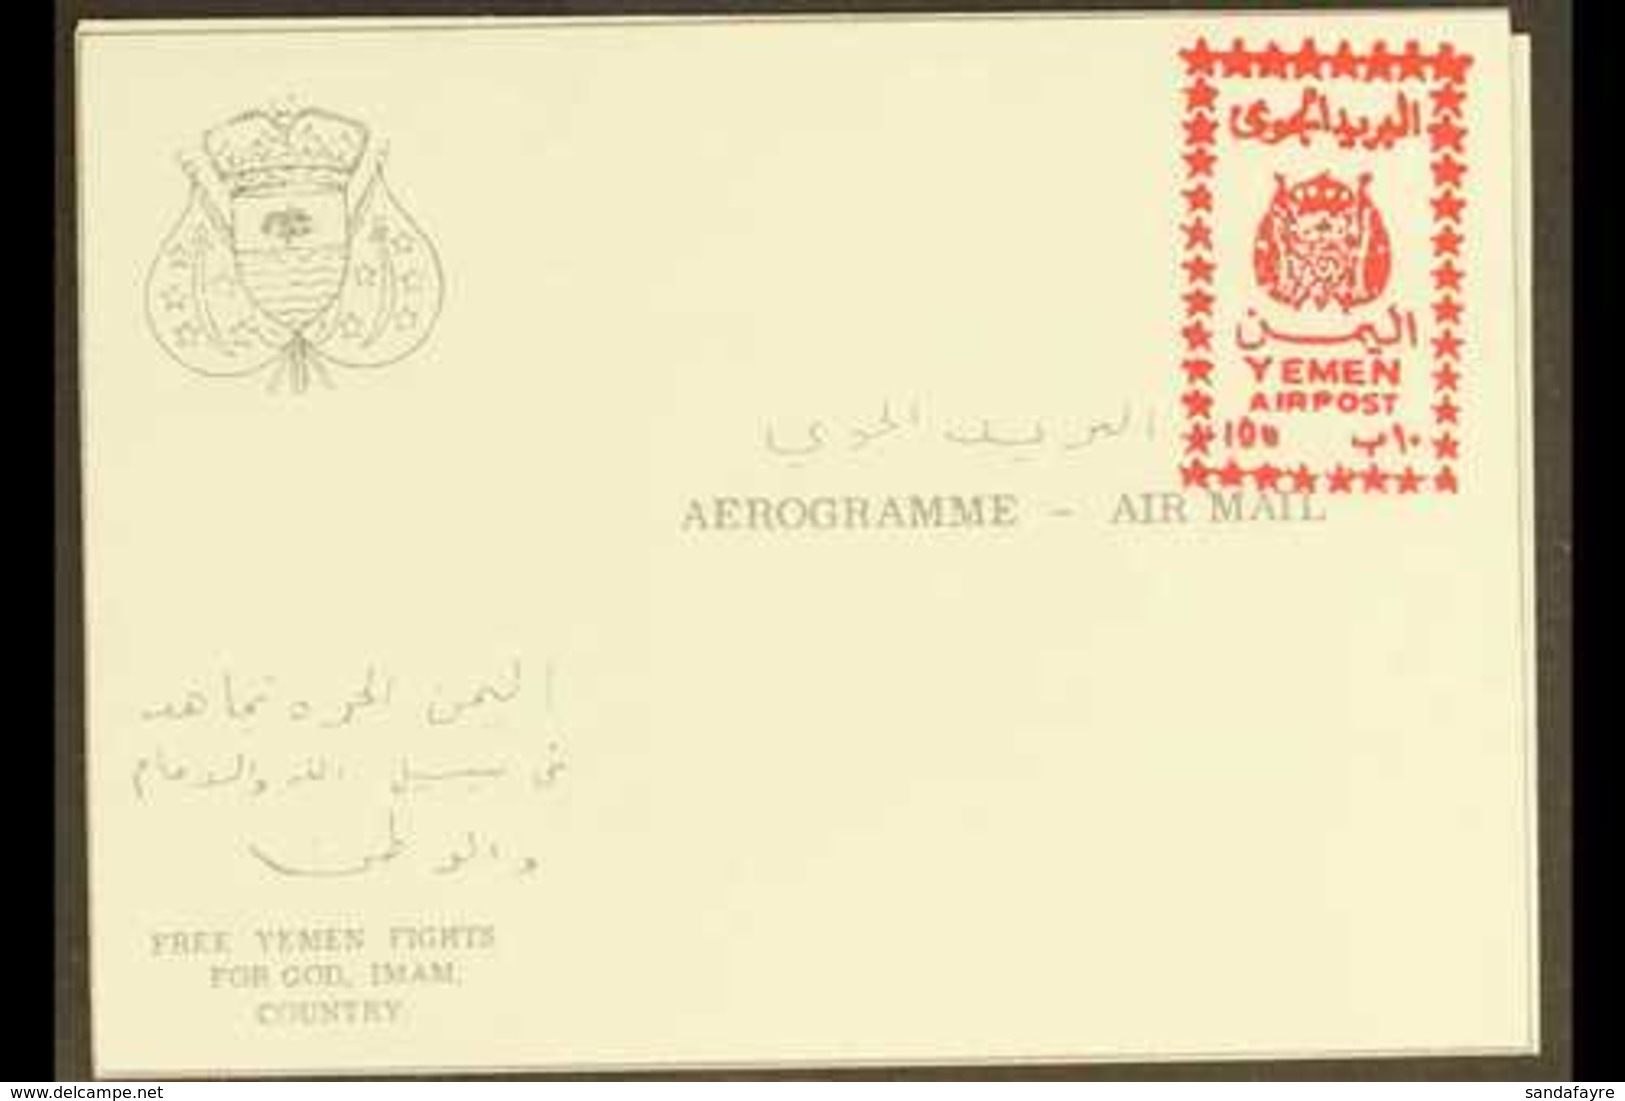 KINGDOM OF YEMEN  POSTAL STATIONERY 1966 10b Red On White Aerogramme, Very Fine Unused, Ex The Conde Collection. Very Ra - Yémen